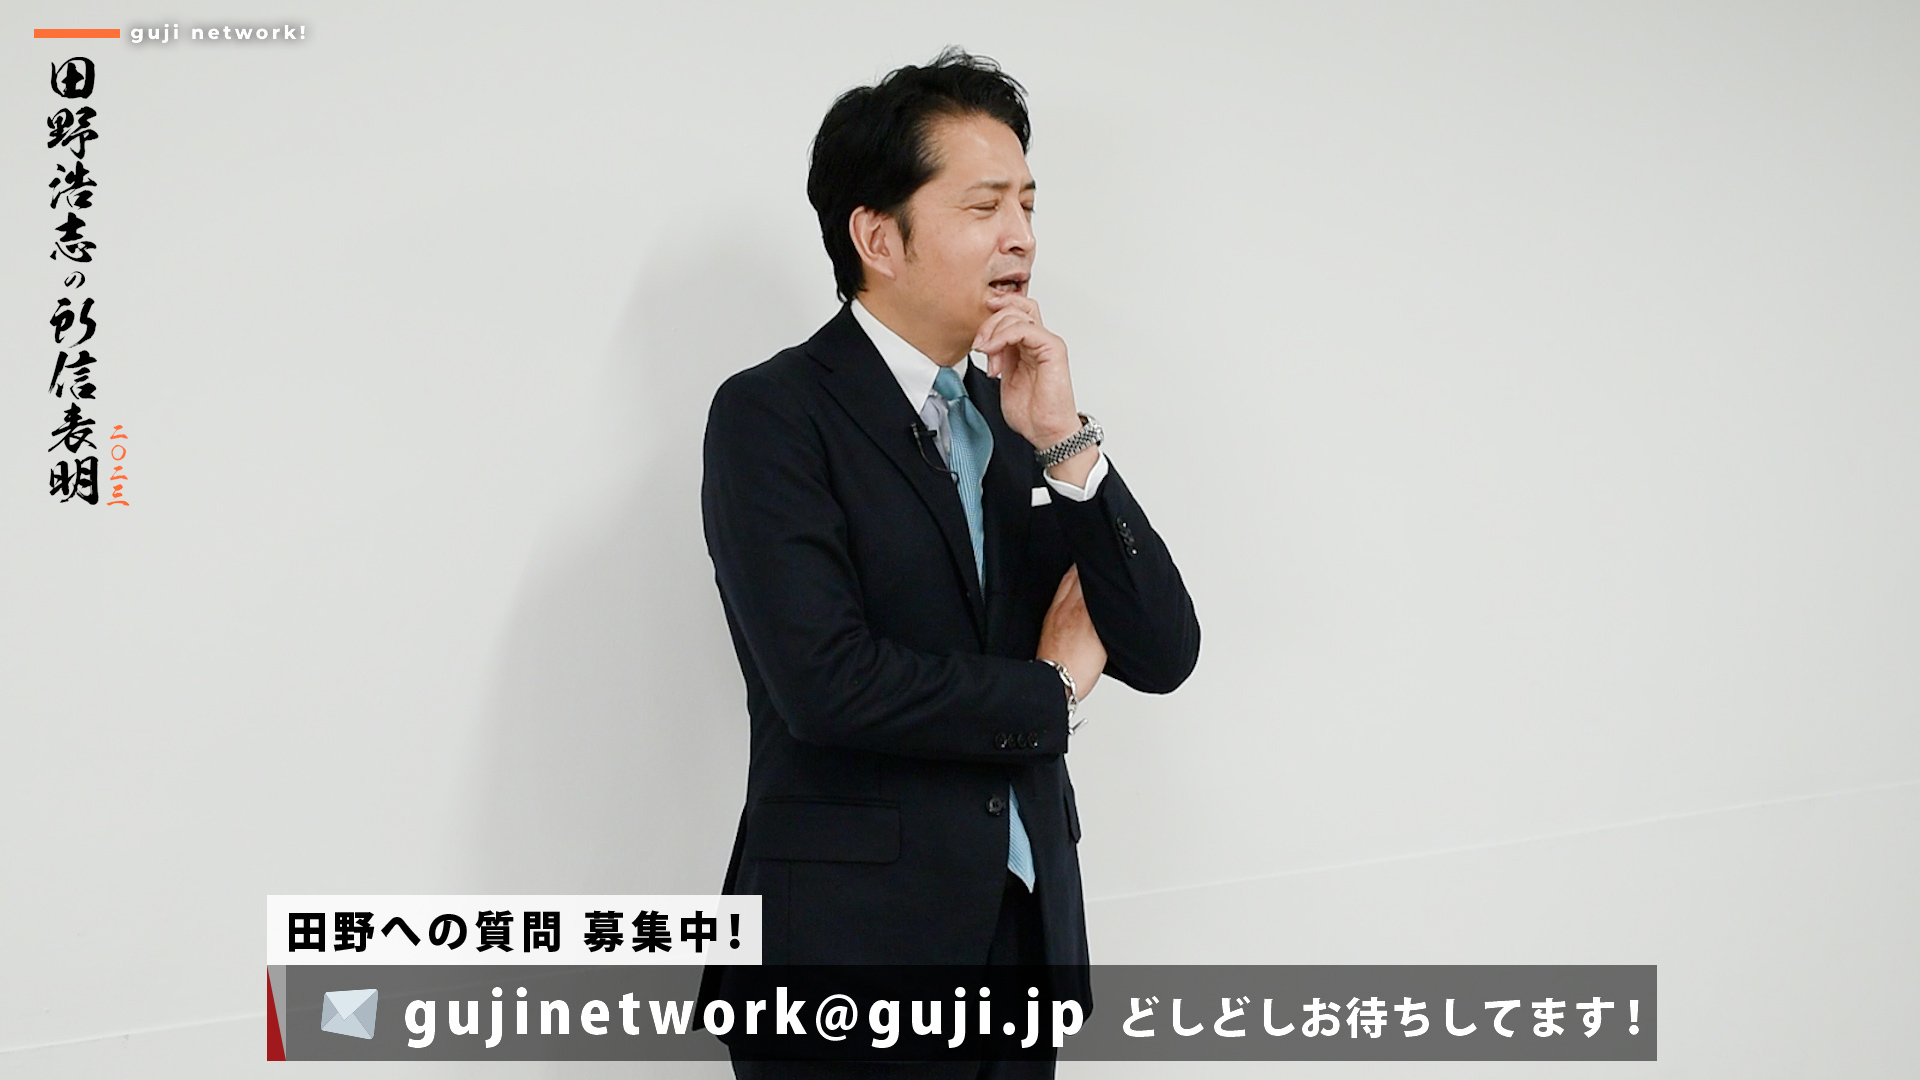 【guji network!】恒例の新春動画です